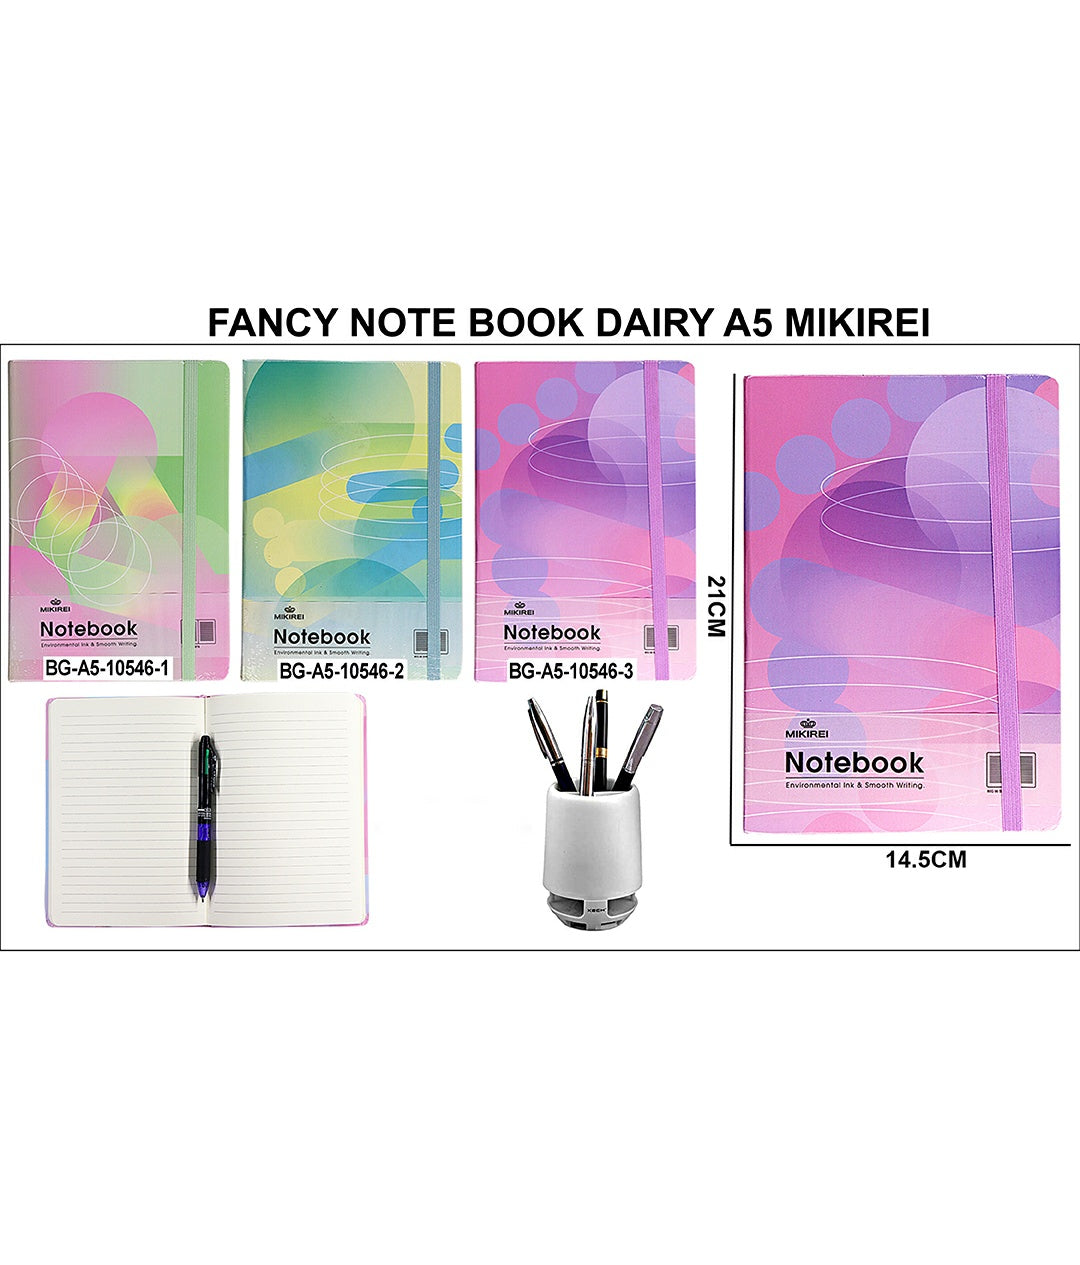 Note Book Dairy A5 Mikirei A5-10546 | INKARTO